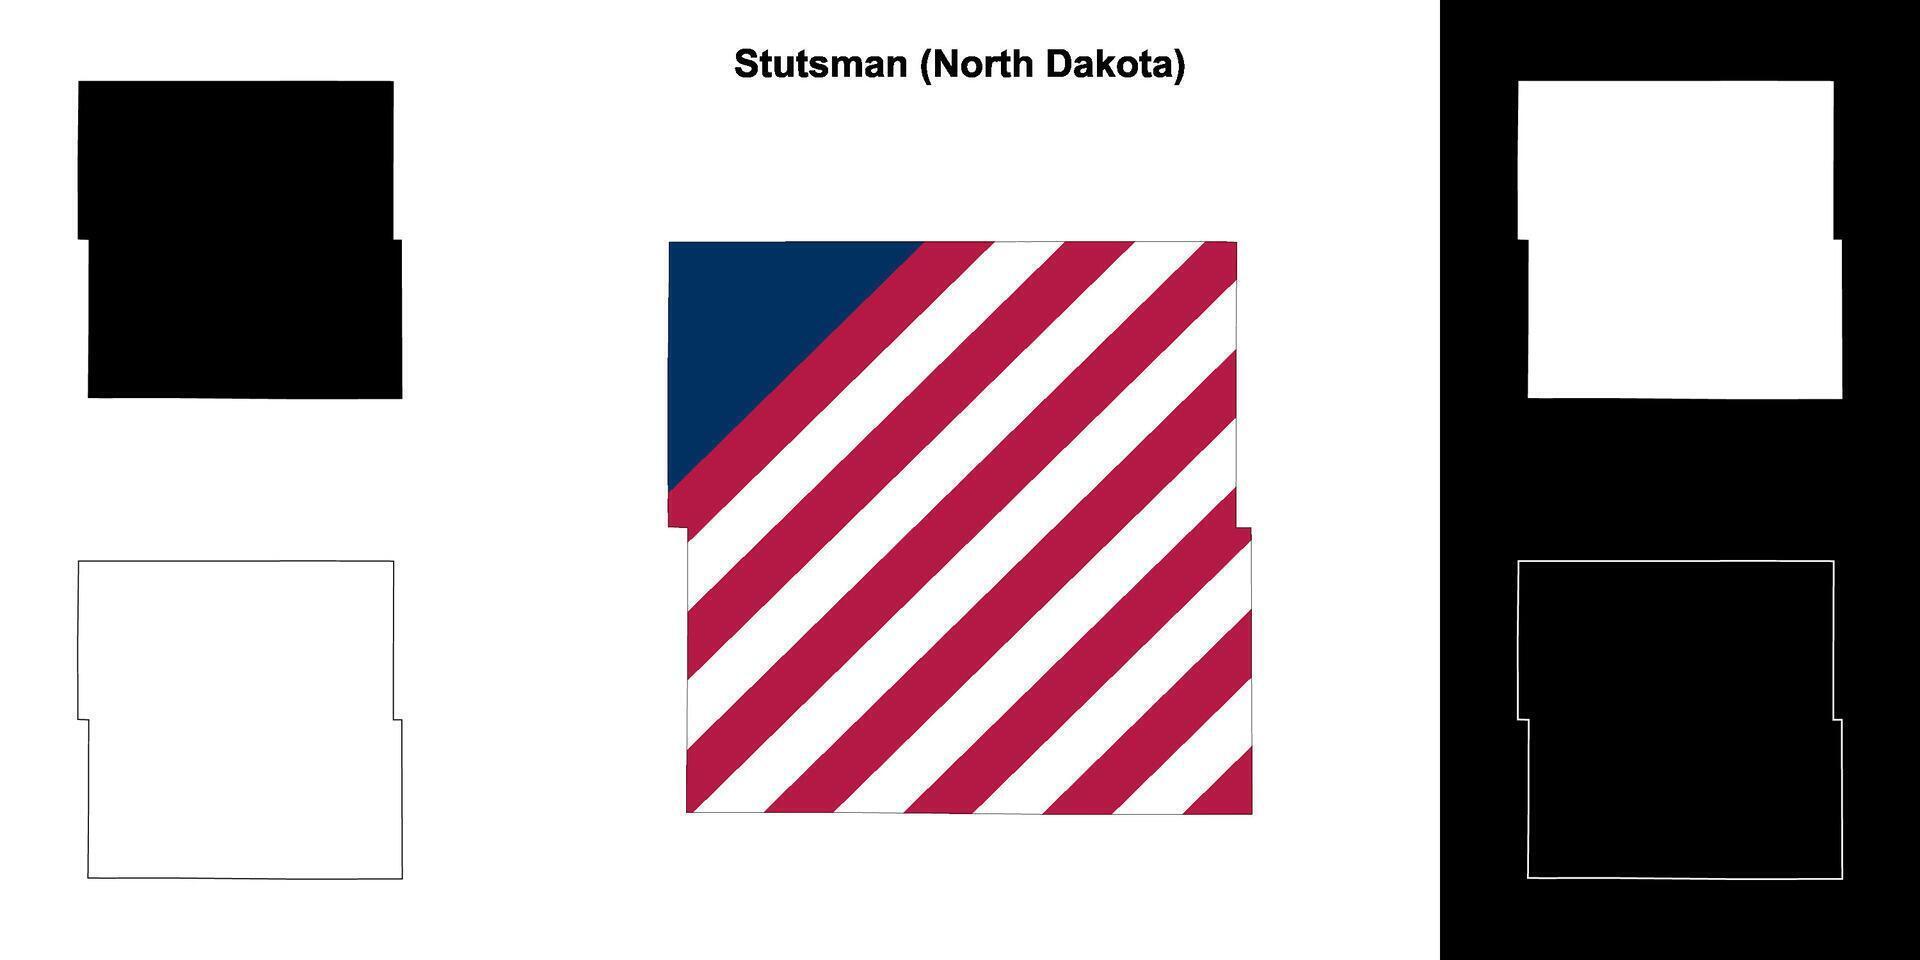 Stutsman contea, nord dakota schema carta geografica impostato vettore